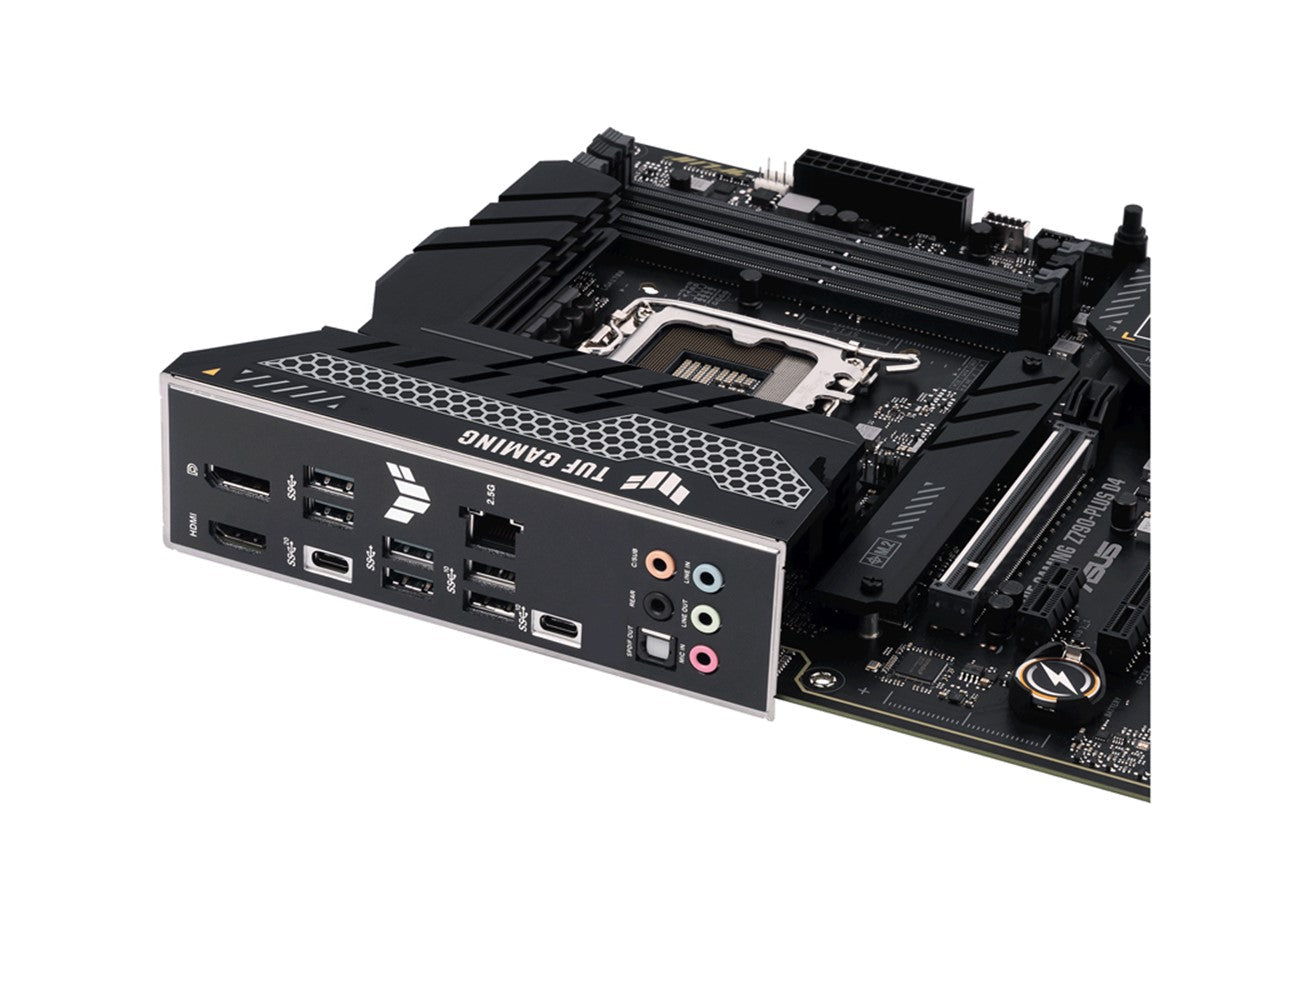 Asus TUF Gaming Z790-PLUS D4 ATX Motherboard